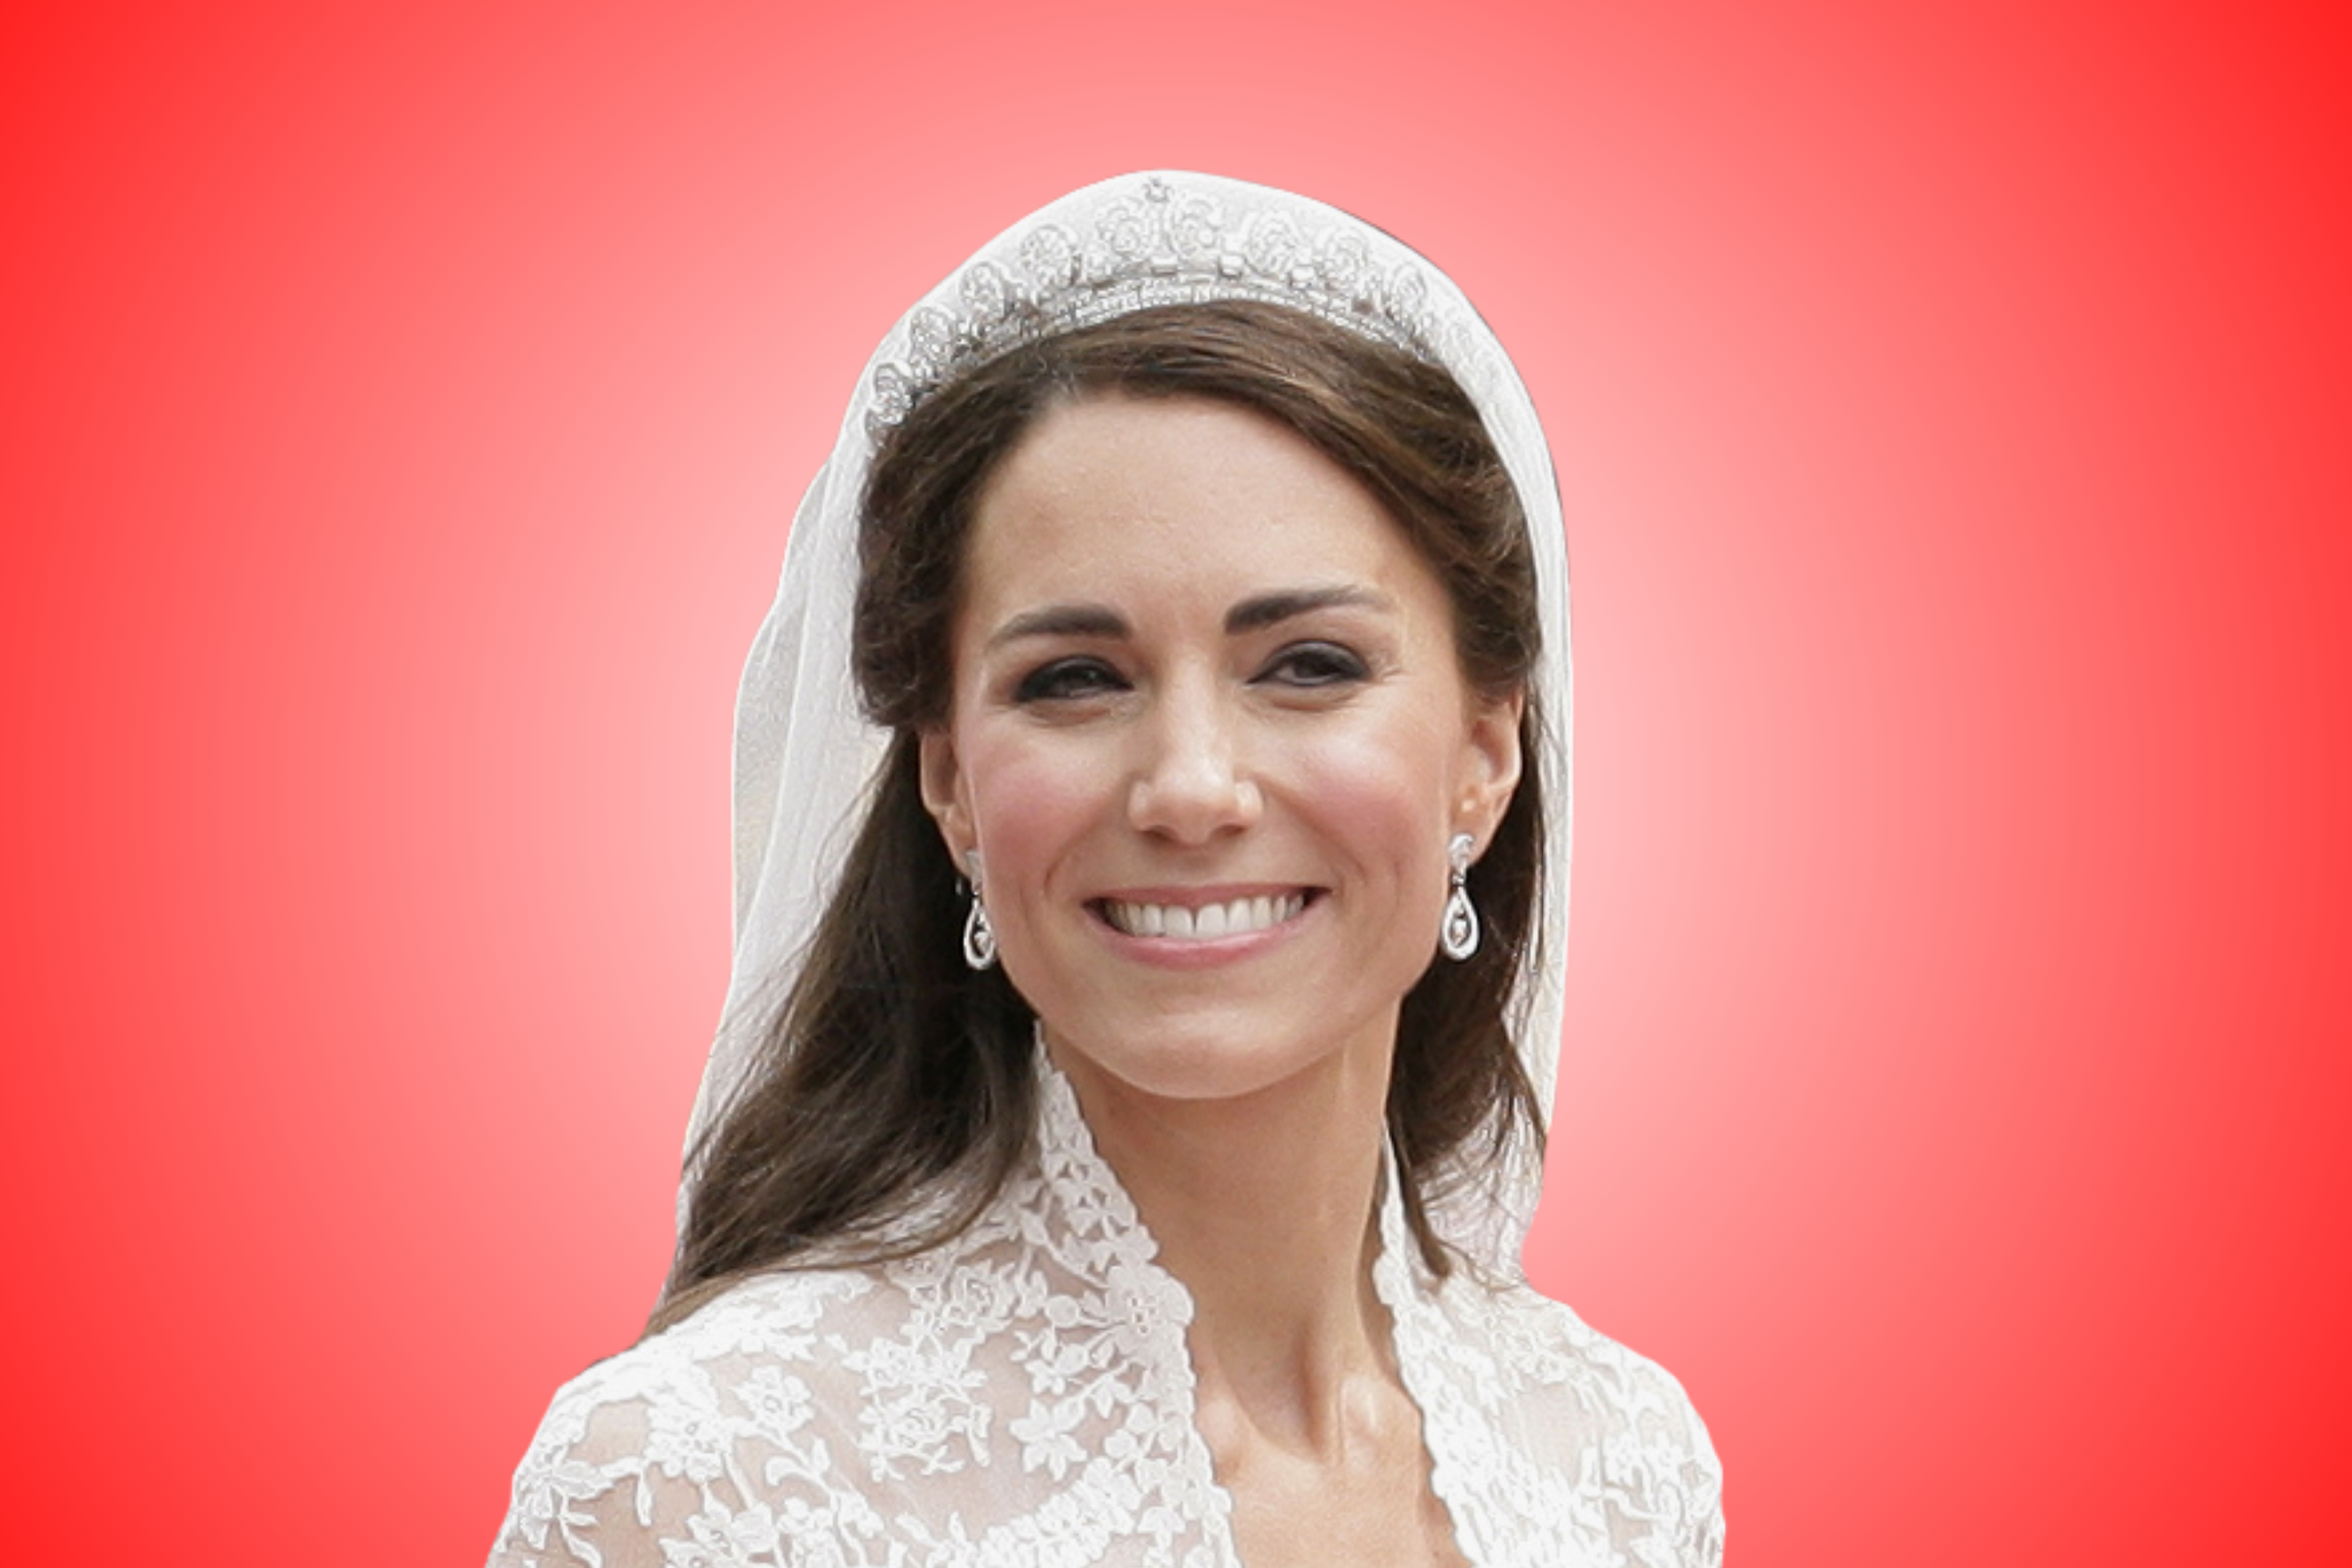 Princess Kate’s glittering wedding tiara: Where is it now?